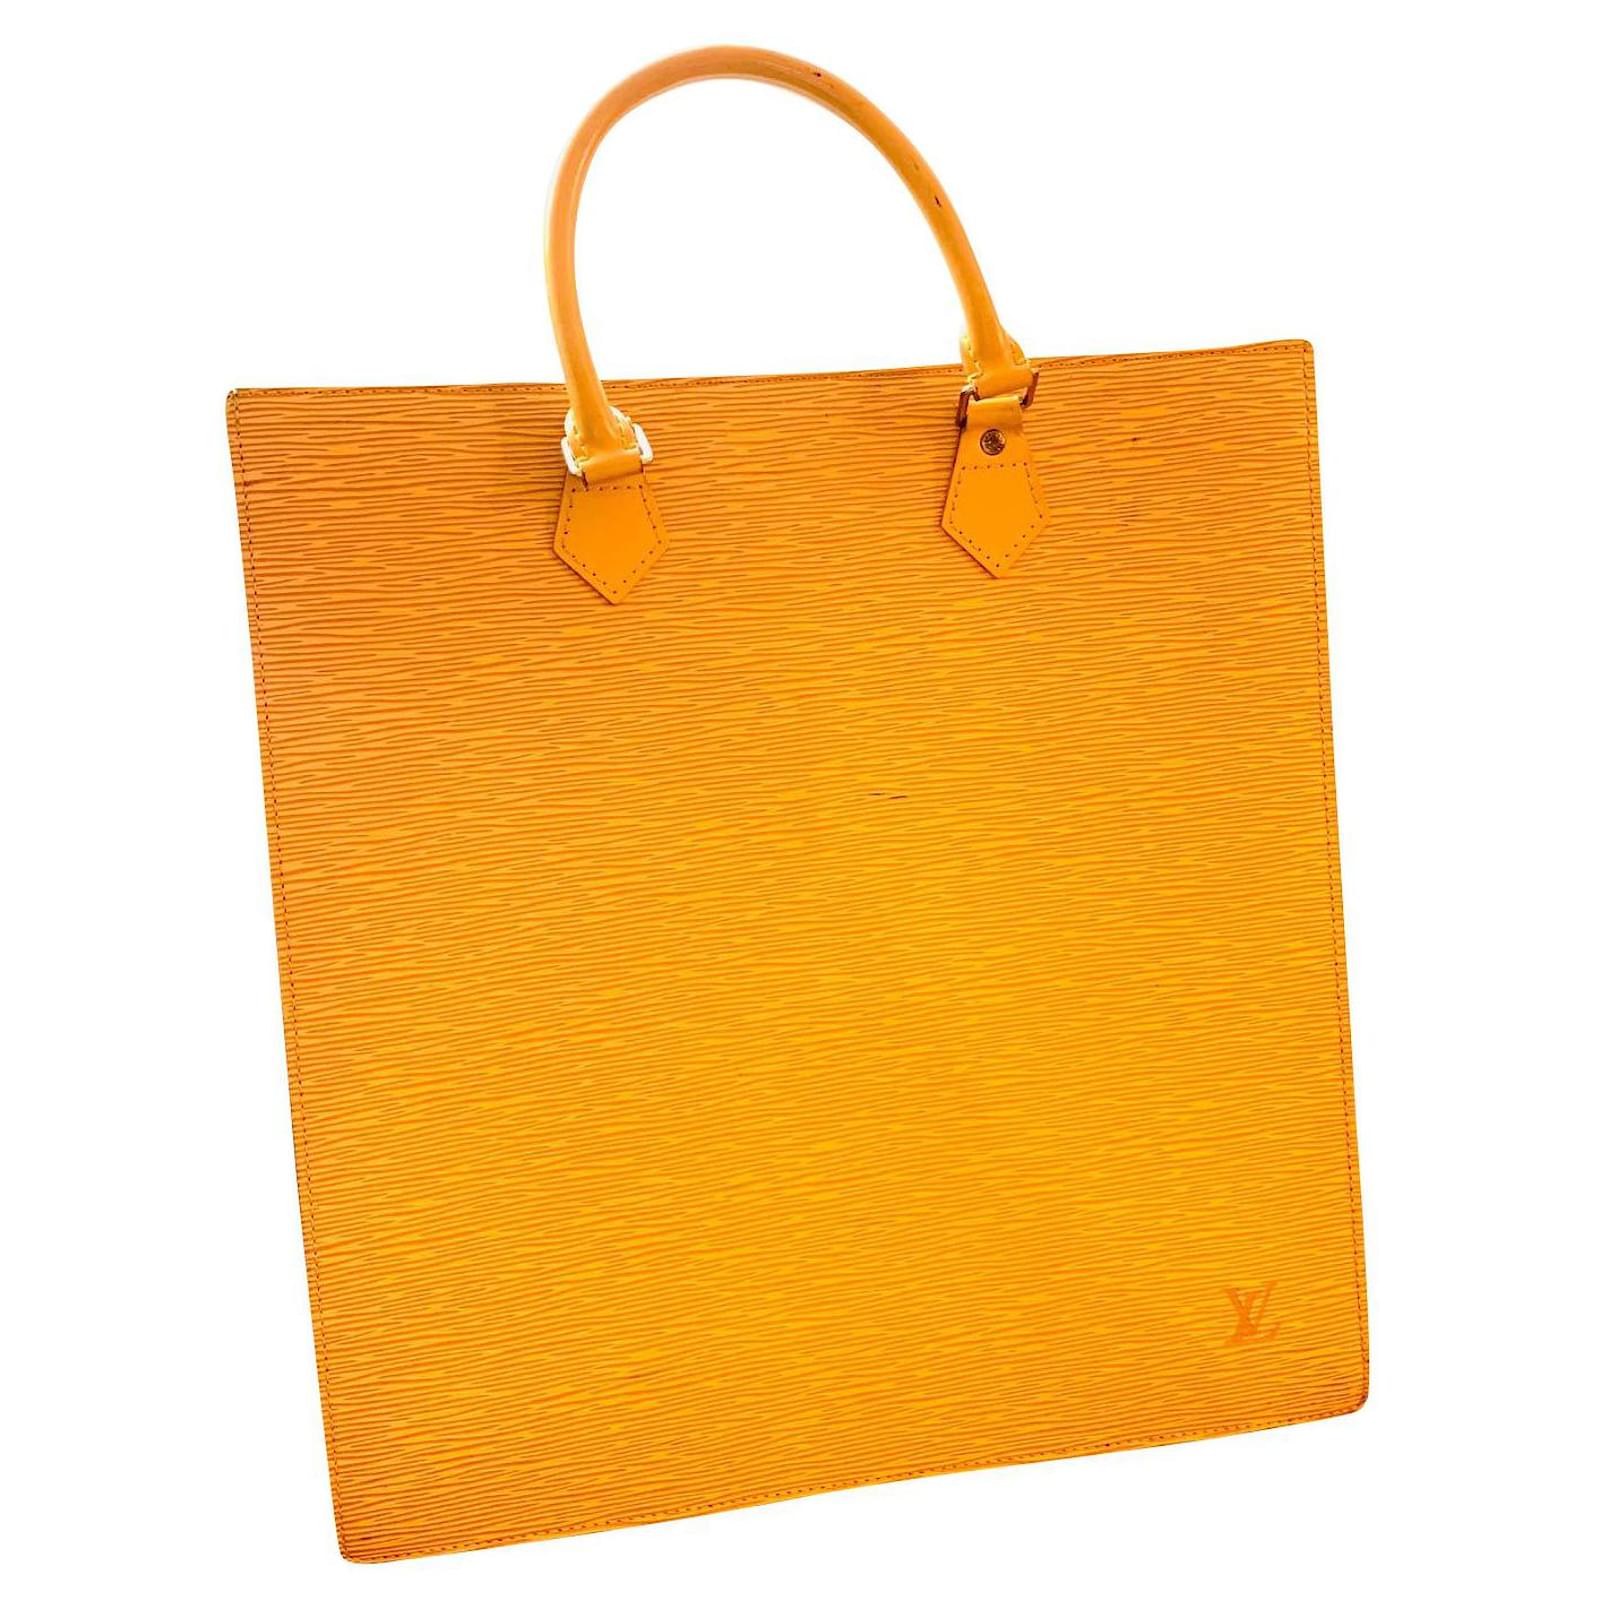 Louis Vuitton Monogram Sac Shopping Tote Bag. Made in France